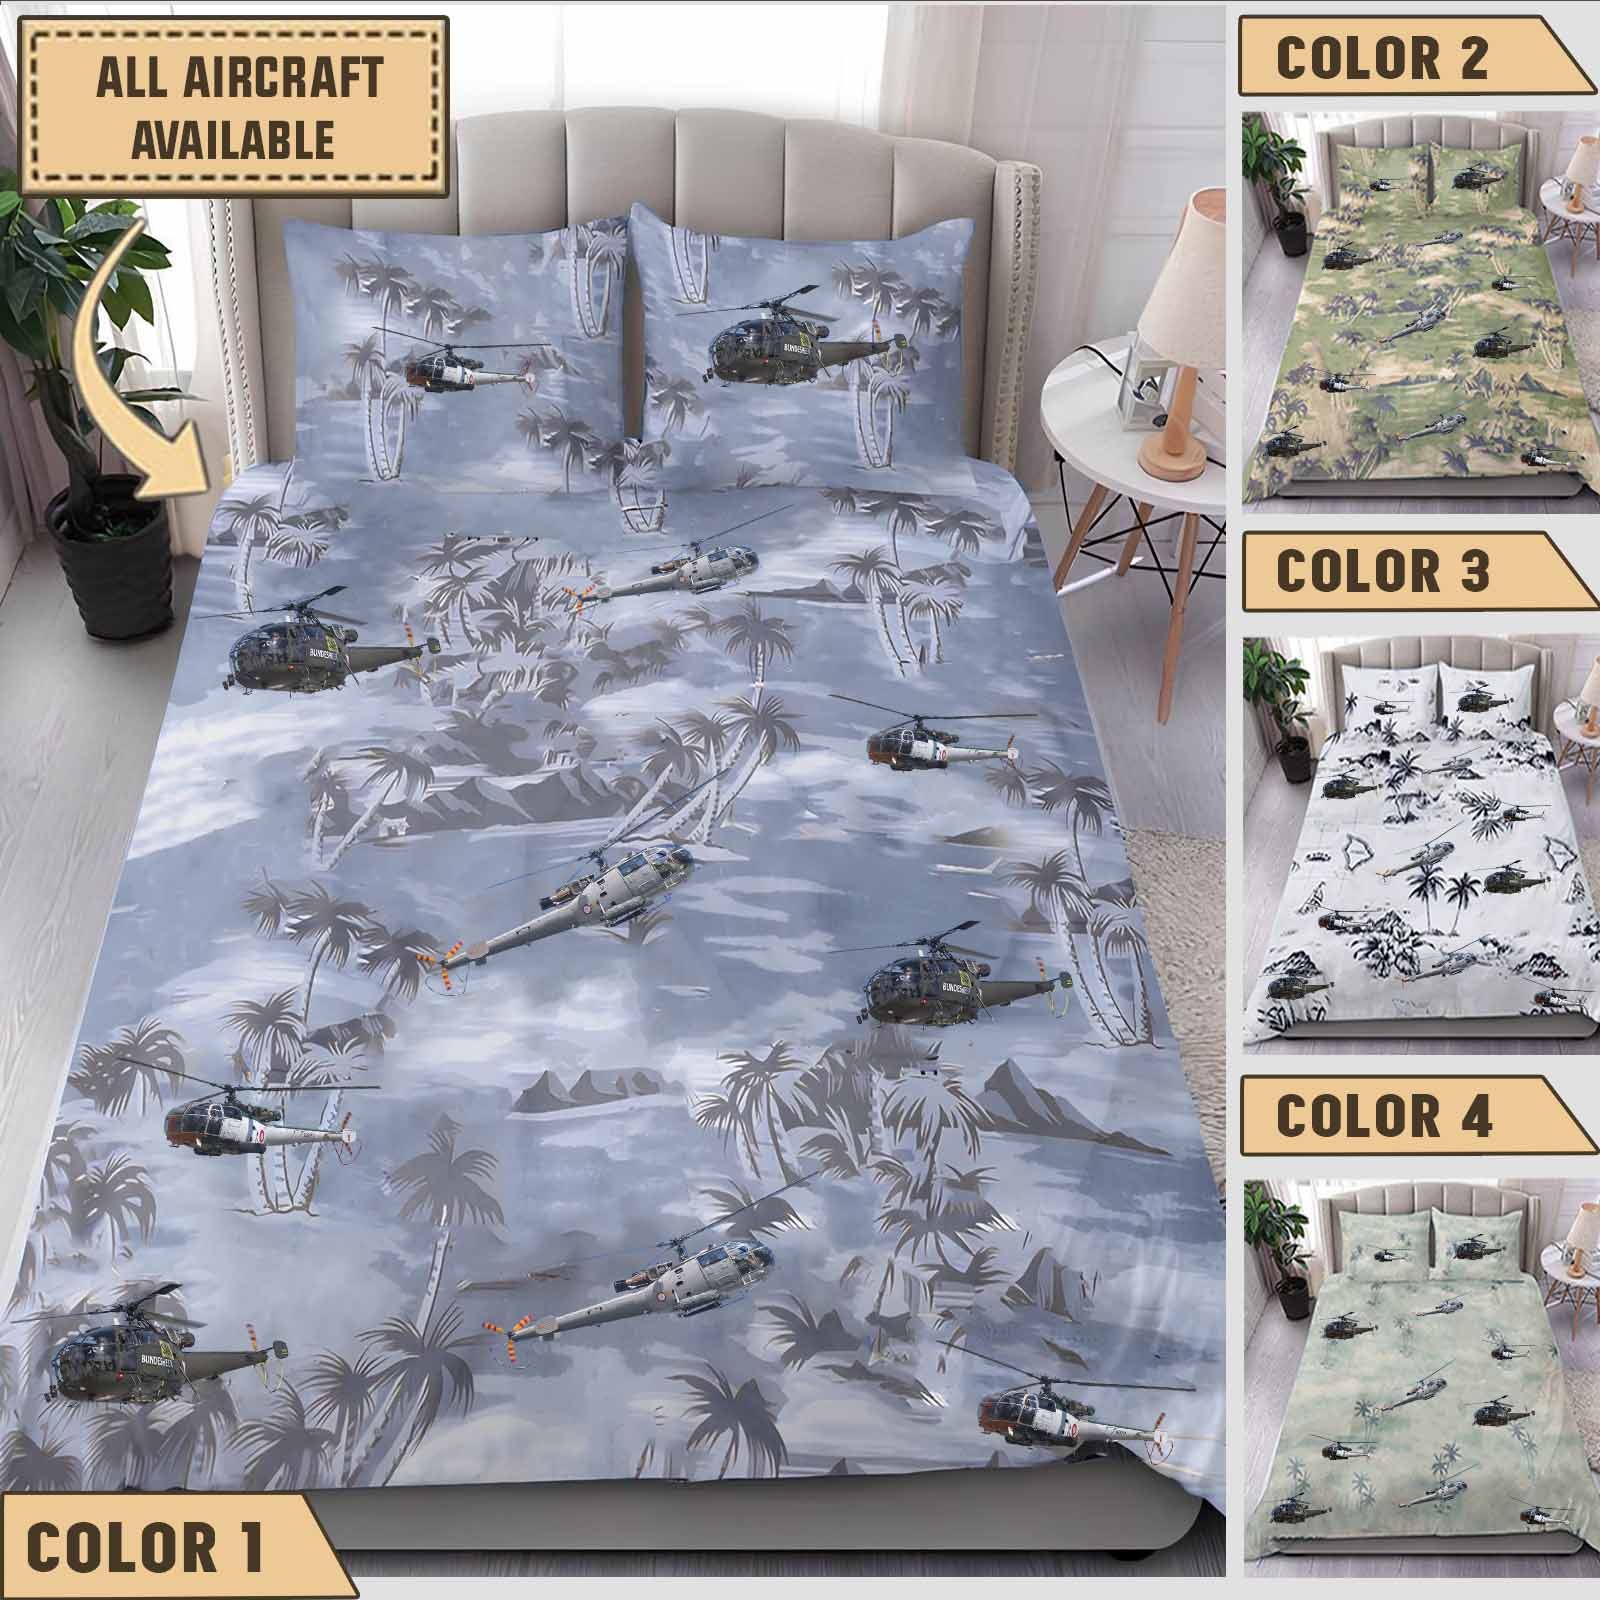 arospatiale alouette iiiaircraft bedding collection cqakw